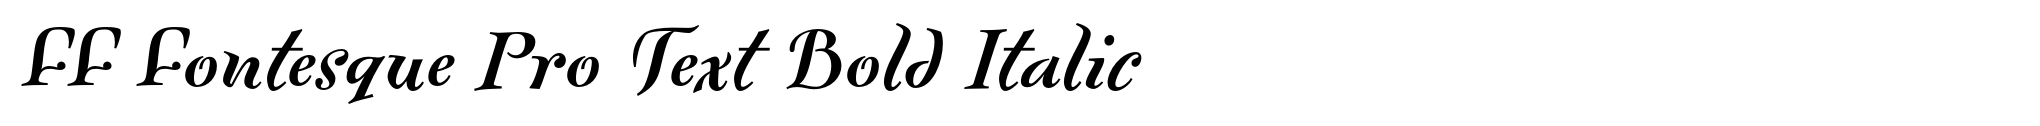 FF Fontesque Pro Text Bold Italic image